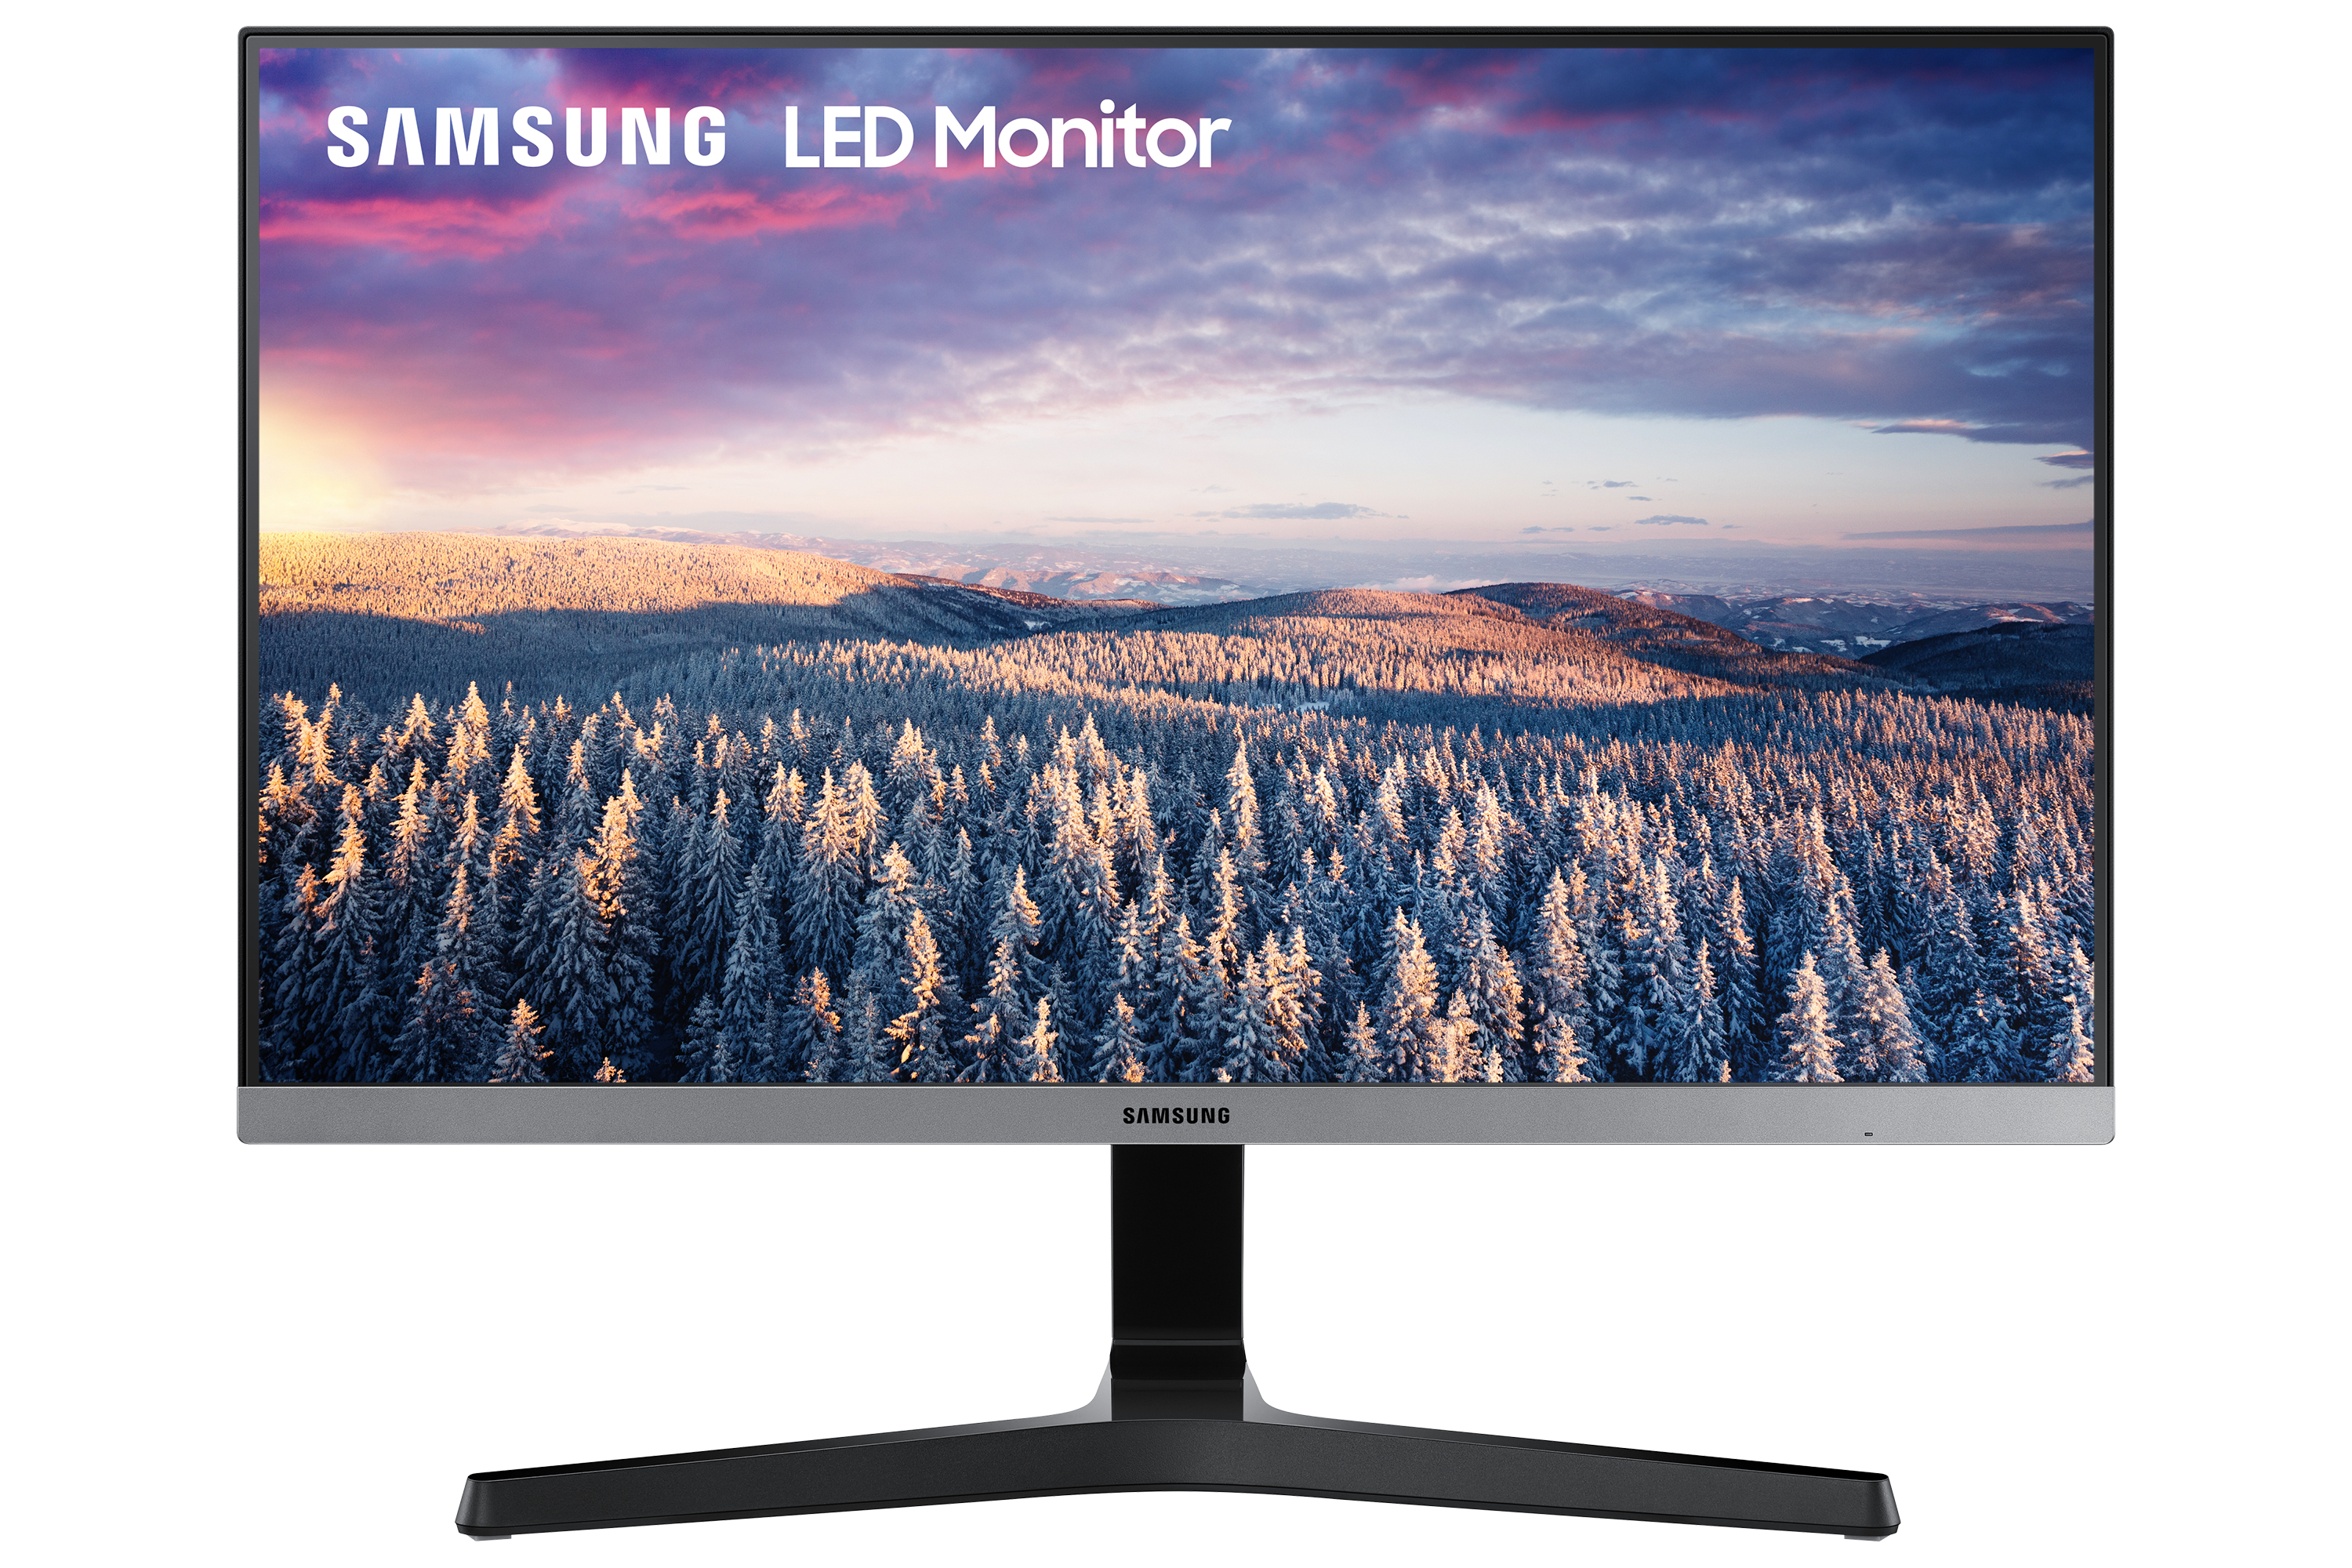 Samsung LS24R350 - Full HD IPS Monitor